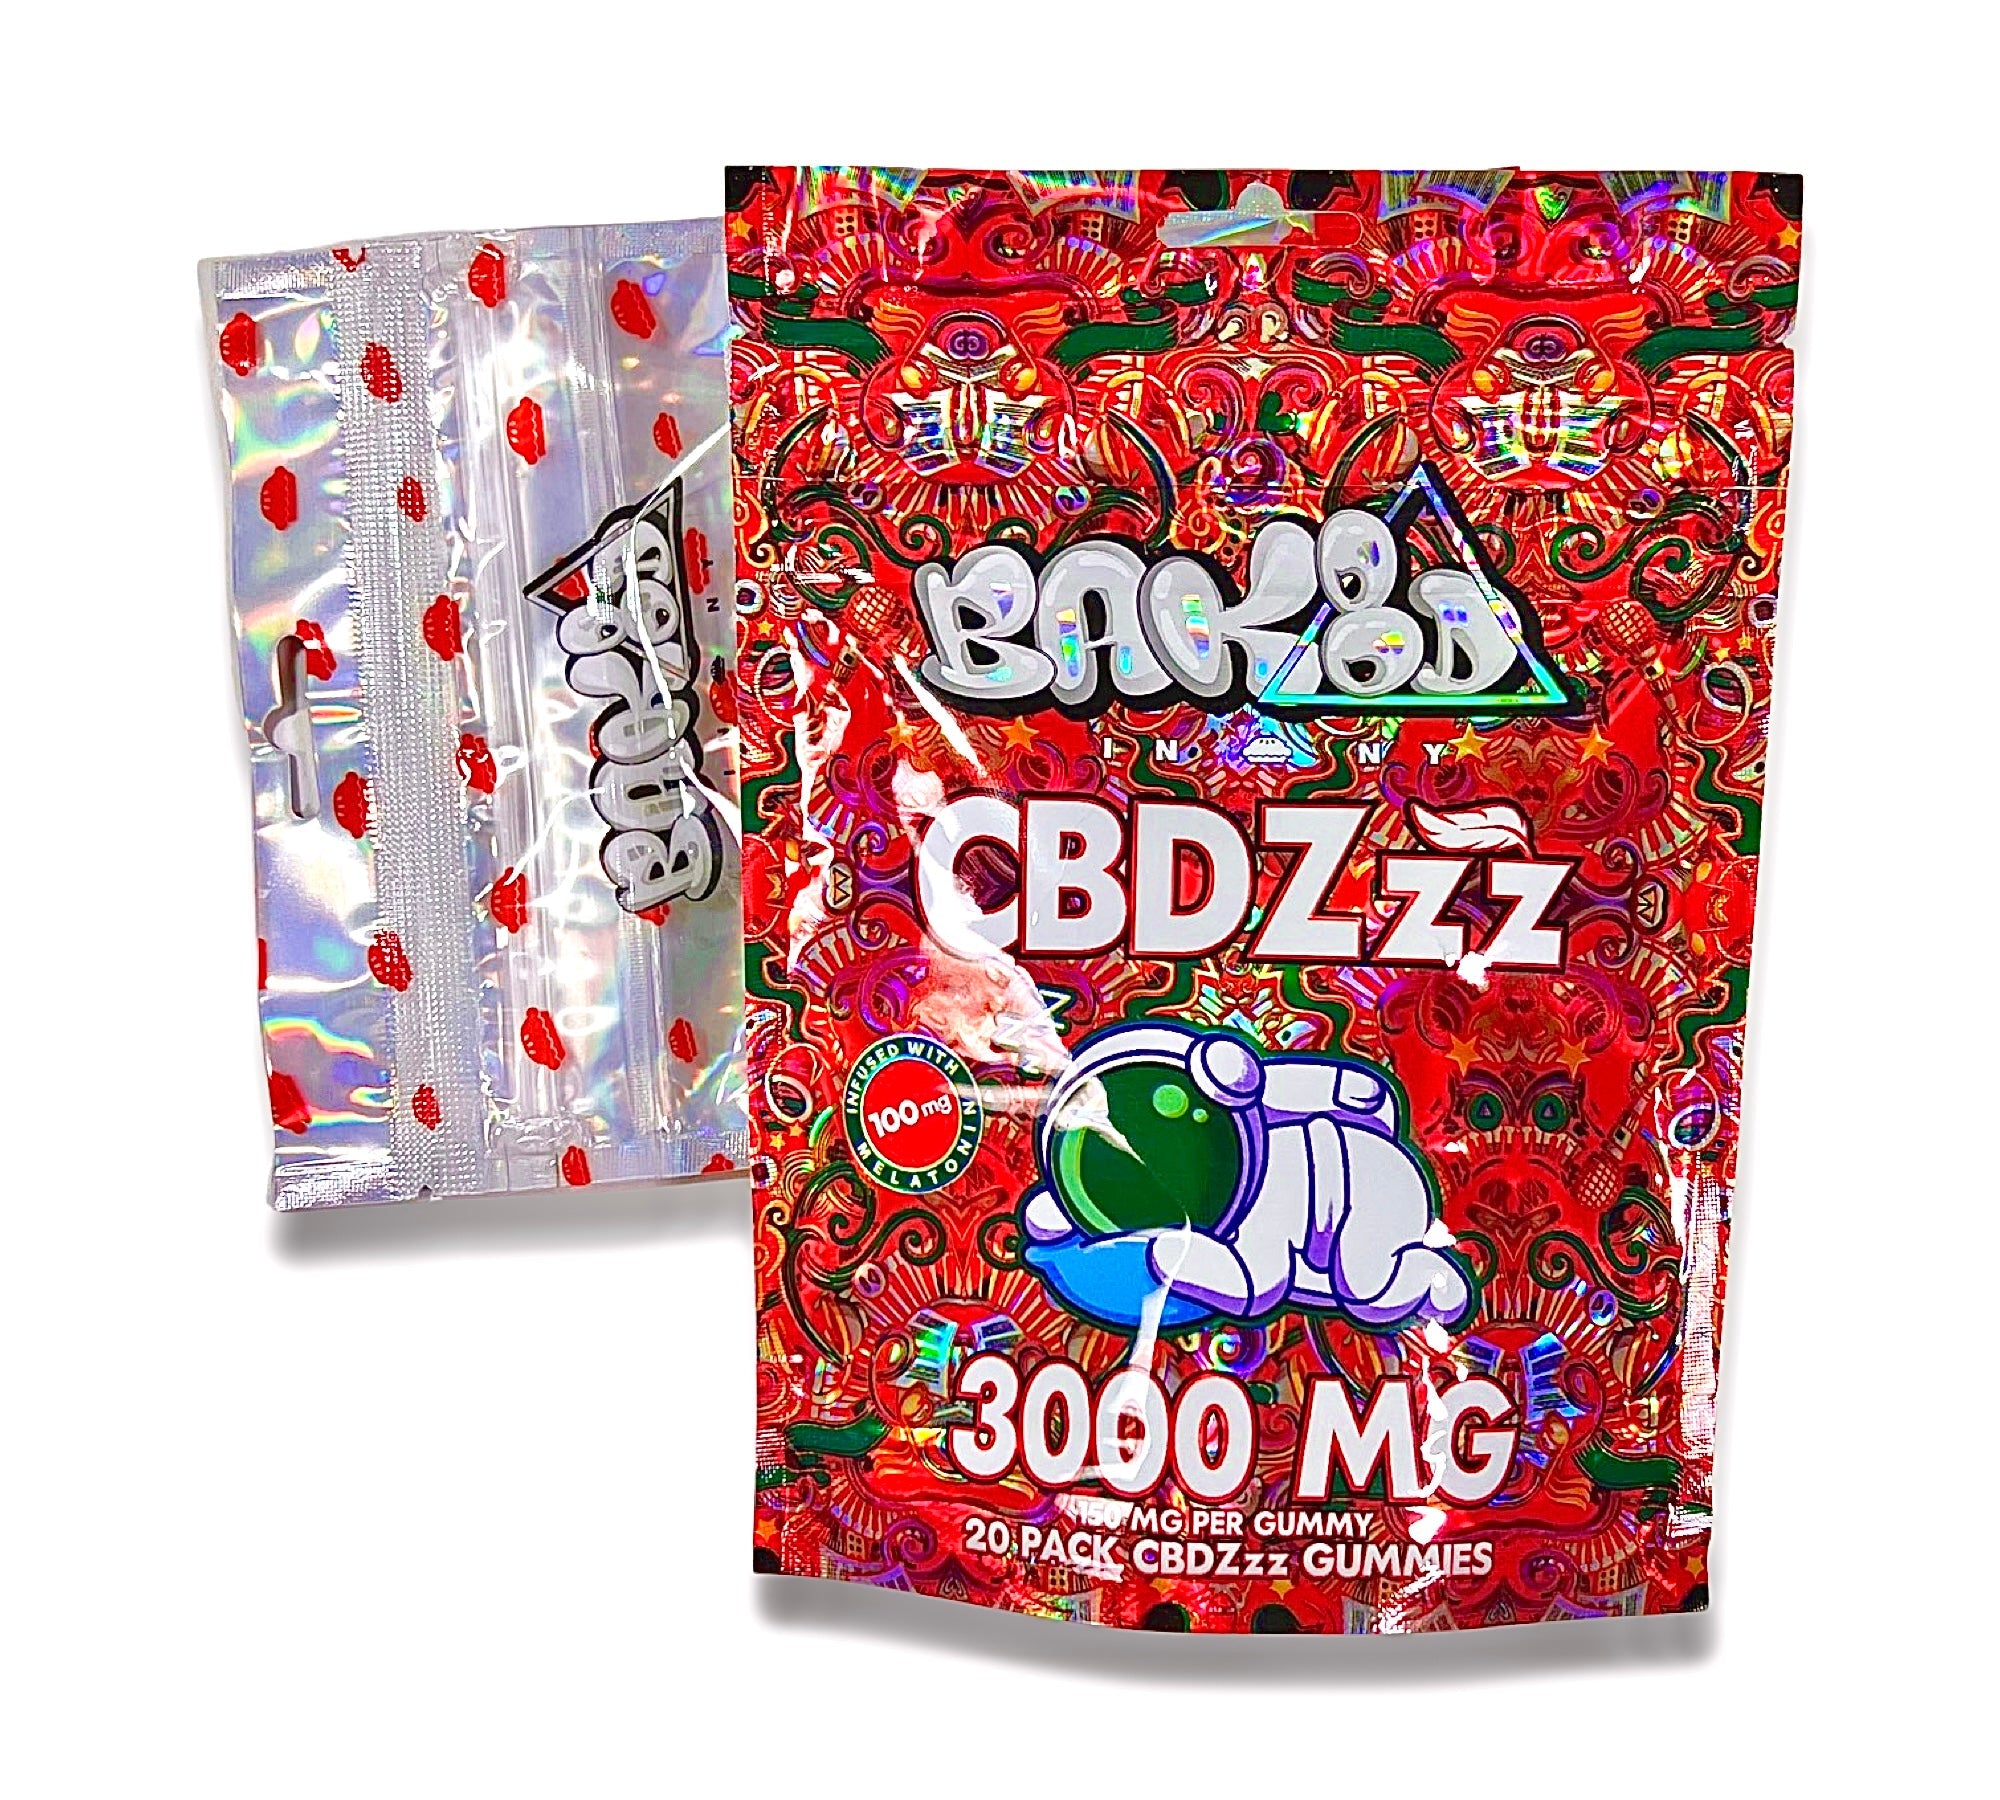 BAK8D Master Blend - CBDZZZ -3000mg Gummies - Single unit